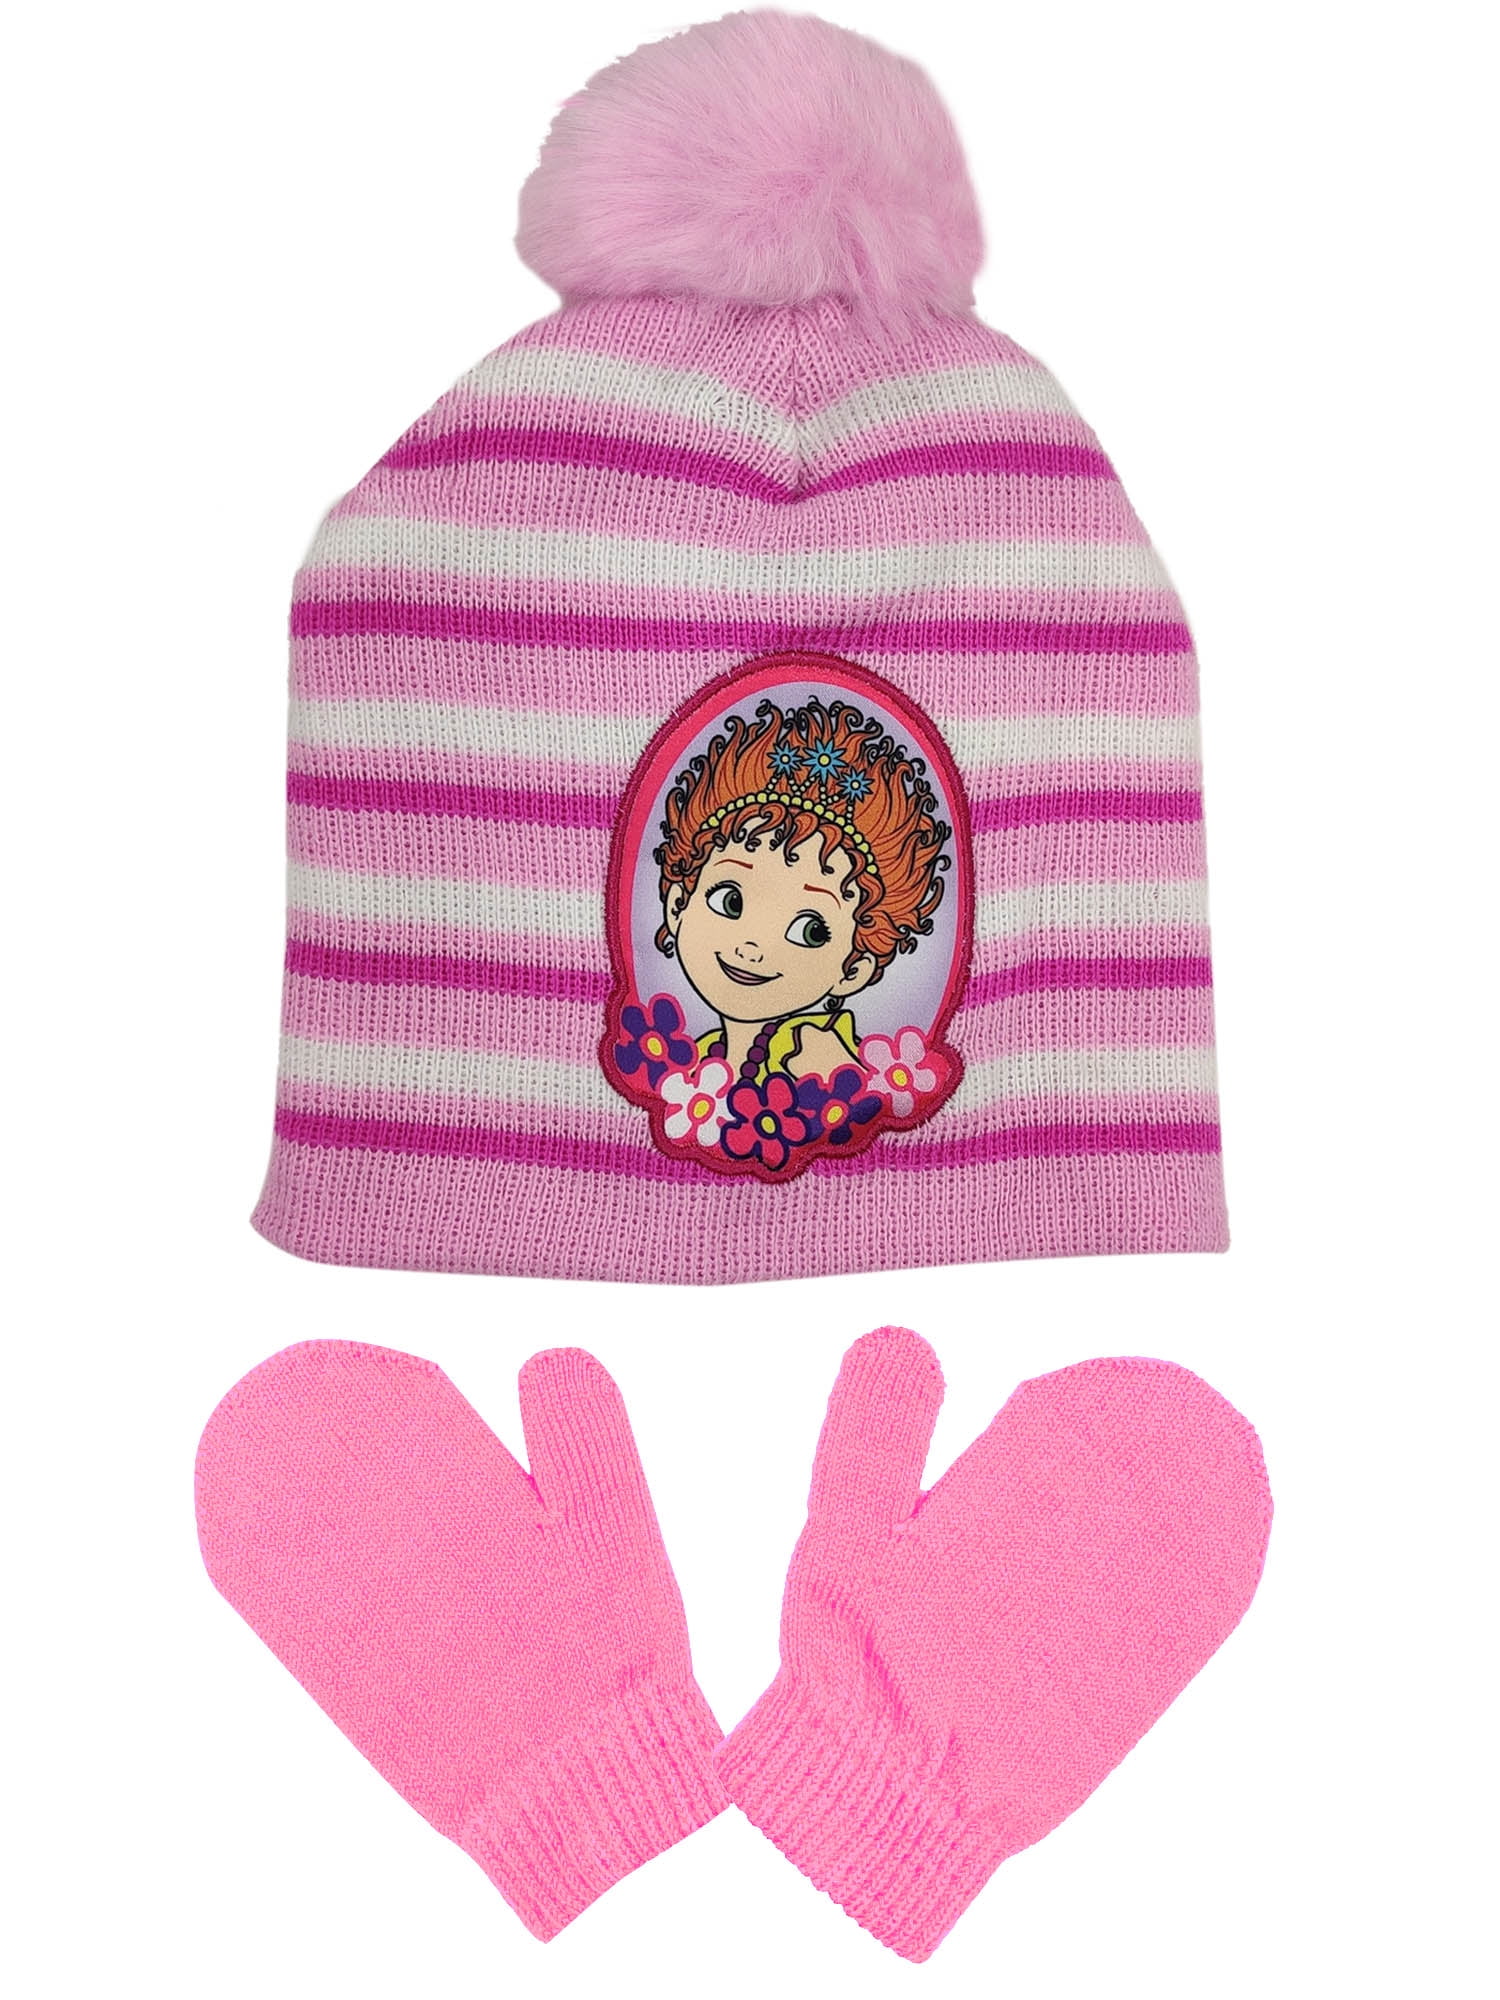 Details about   Disney Minnie Mouse Knit Beanie Hat & Mitten Set Pink Black Pom Pom Girls Gift 